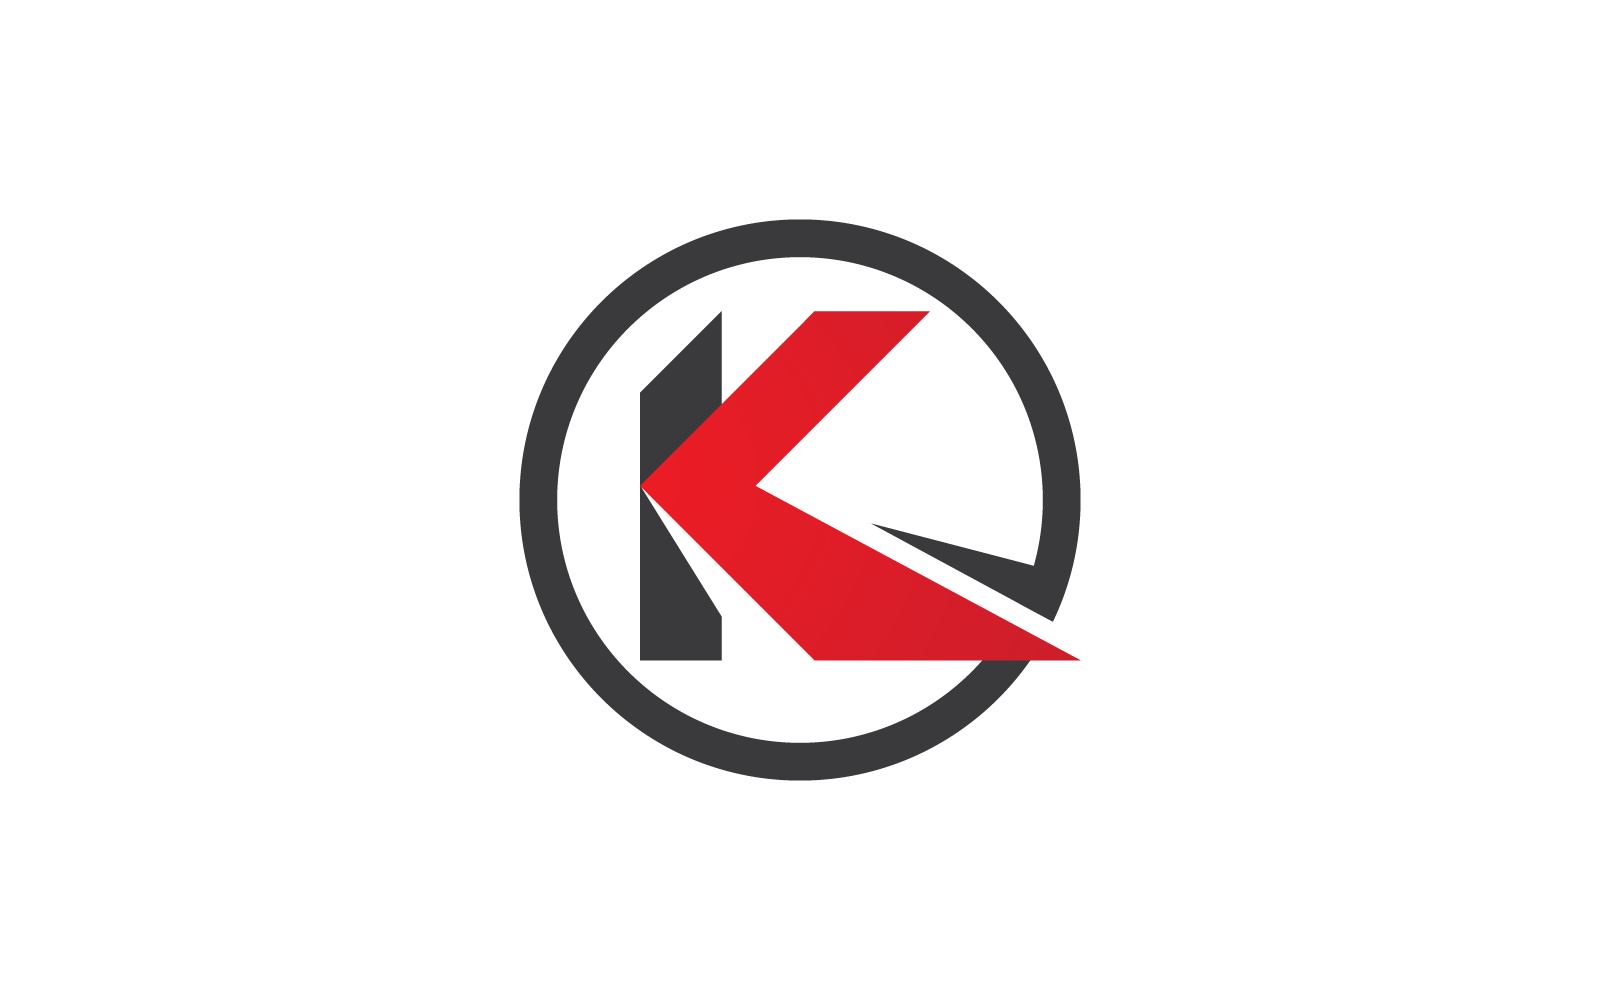 K initial letter logo vector illustration flat design template